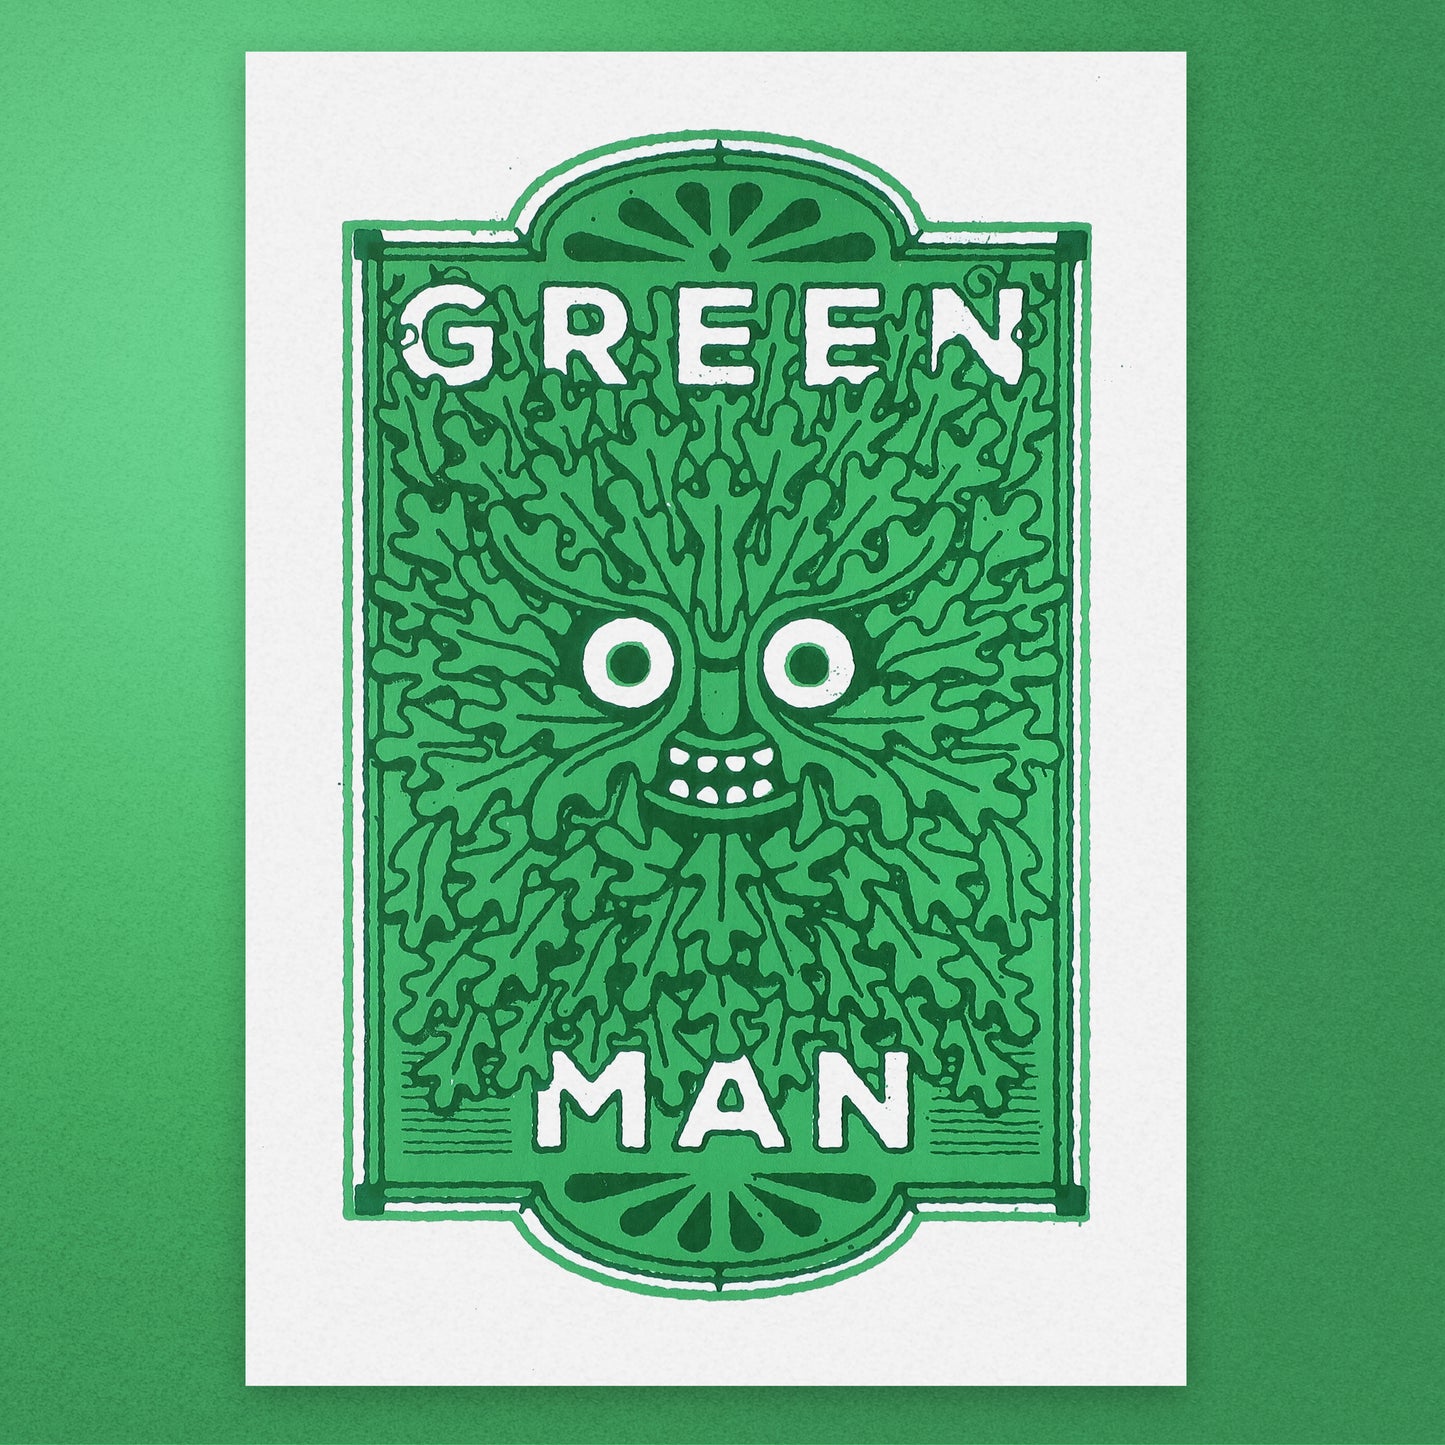 The Green Man - Pub Name Prints